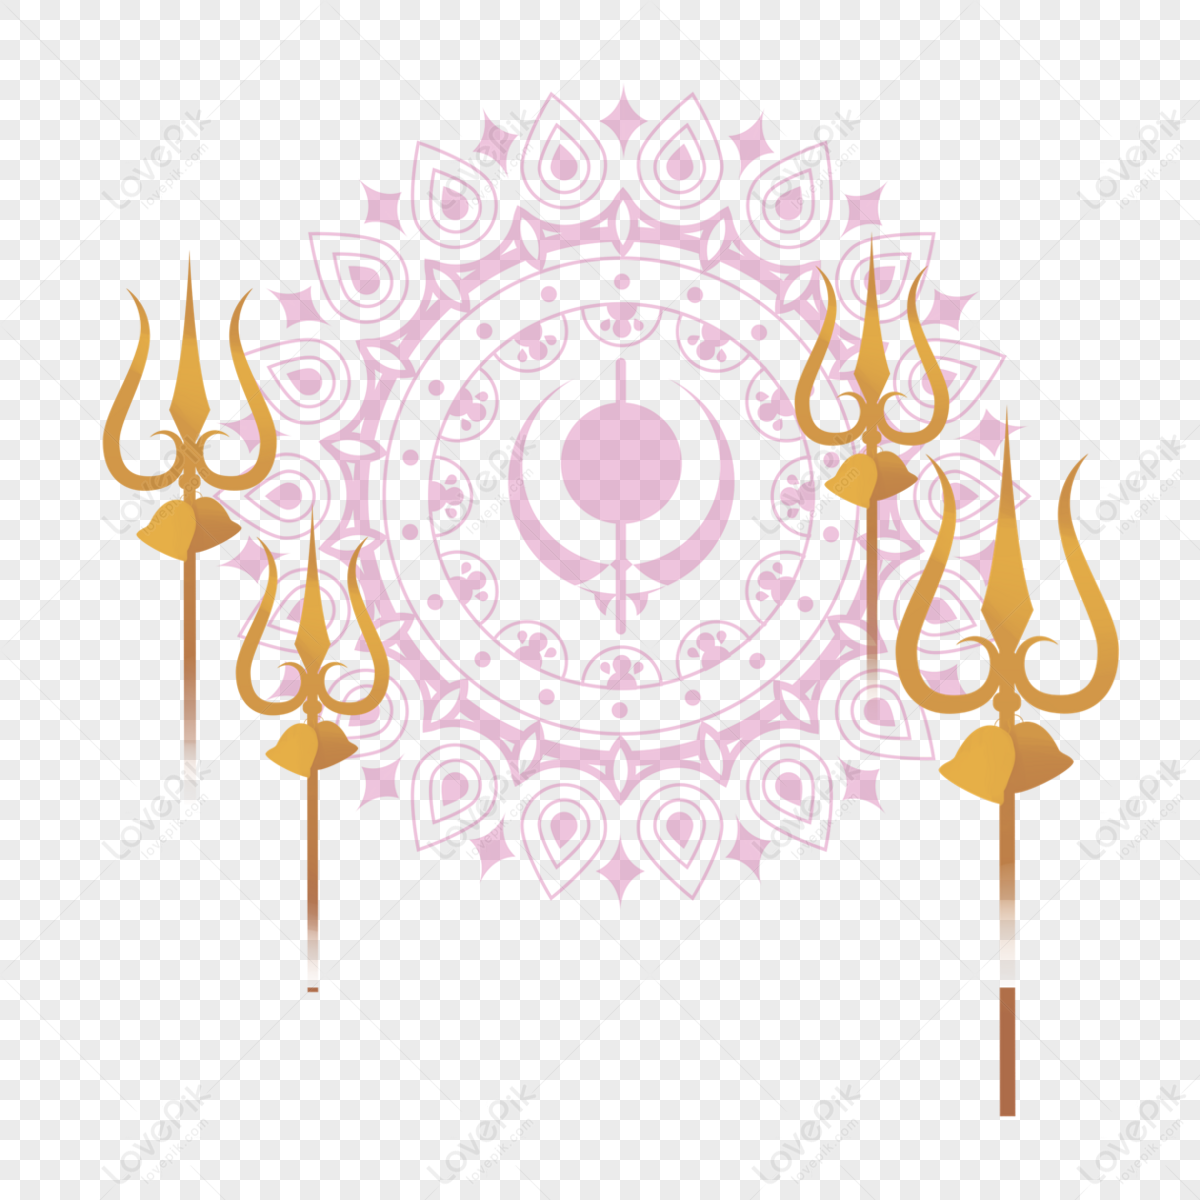 Trishul Tattoo Designs - Symbol of Shiva